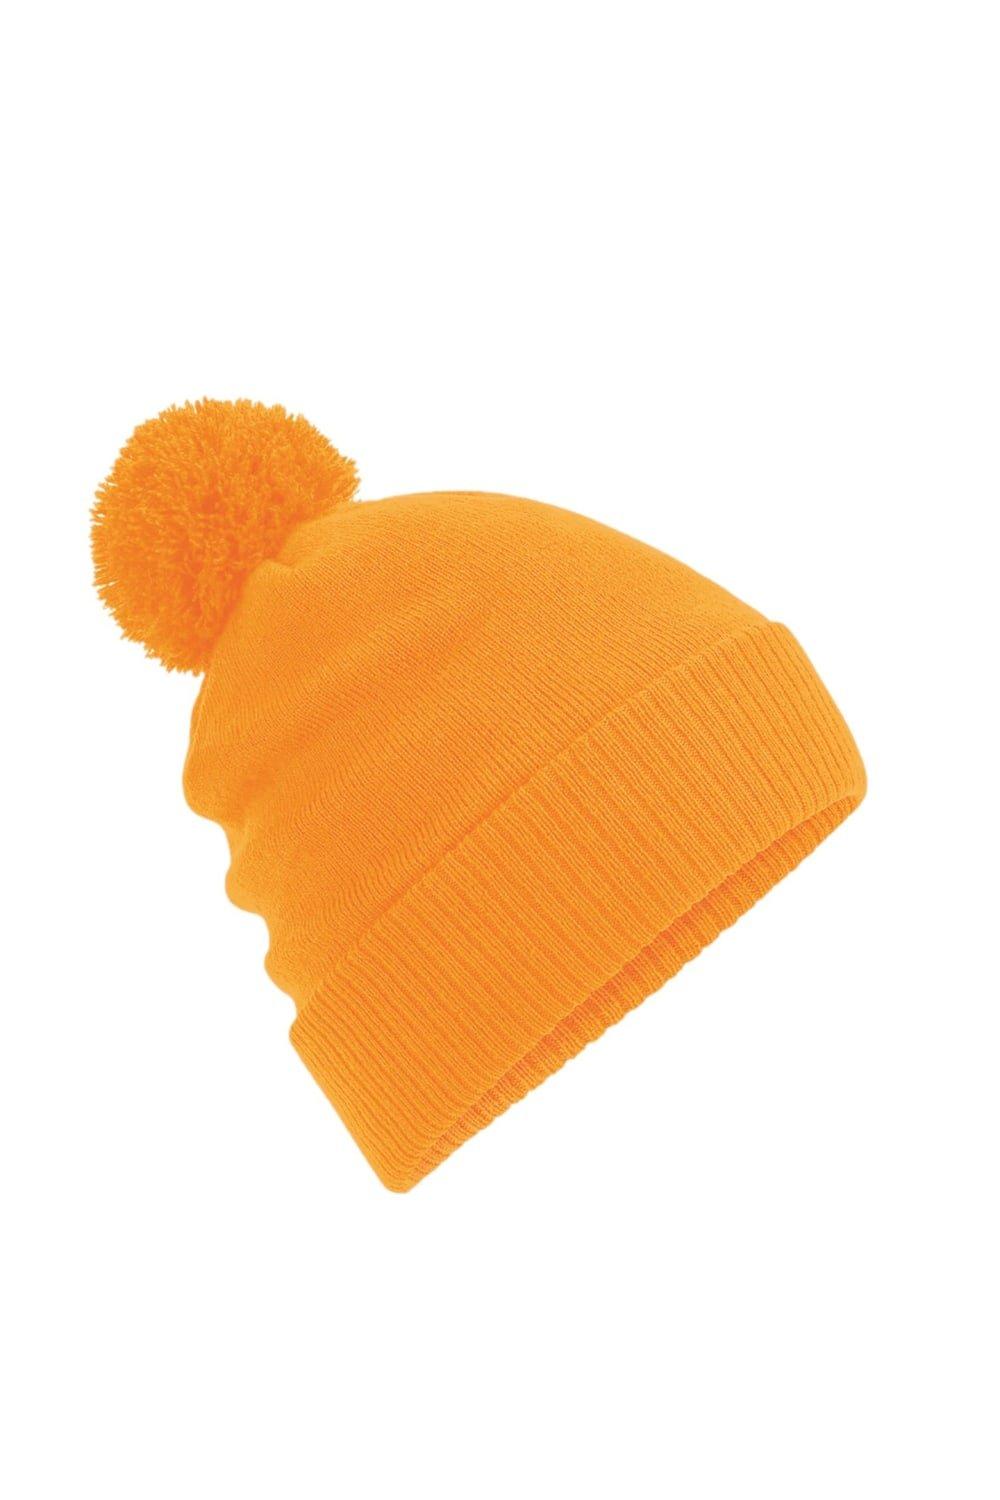 Тепловая шапка Snowstar Beechfield, оранжевый